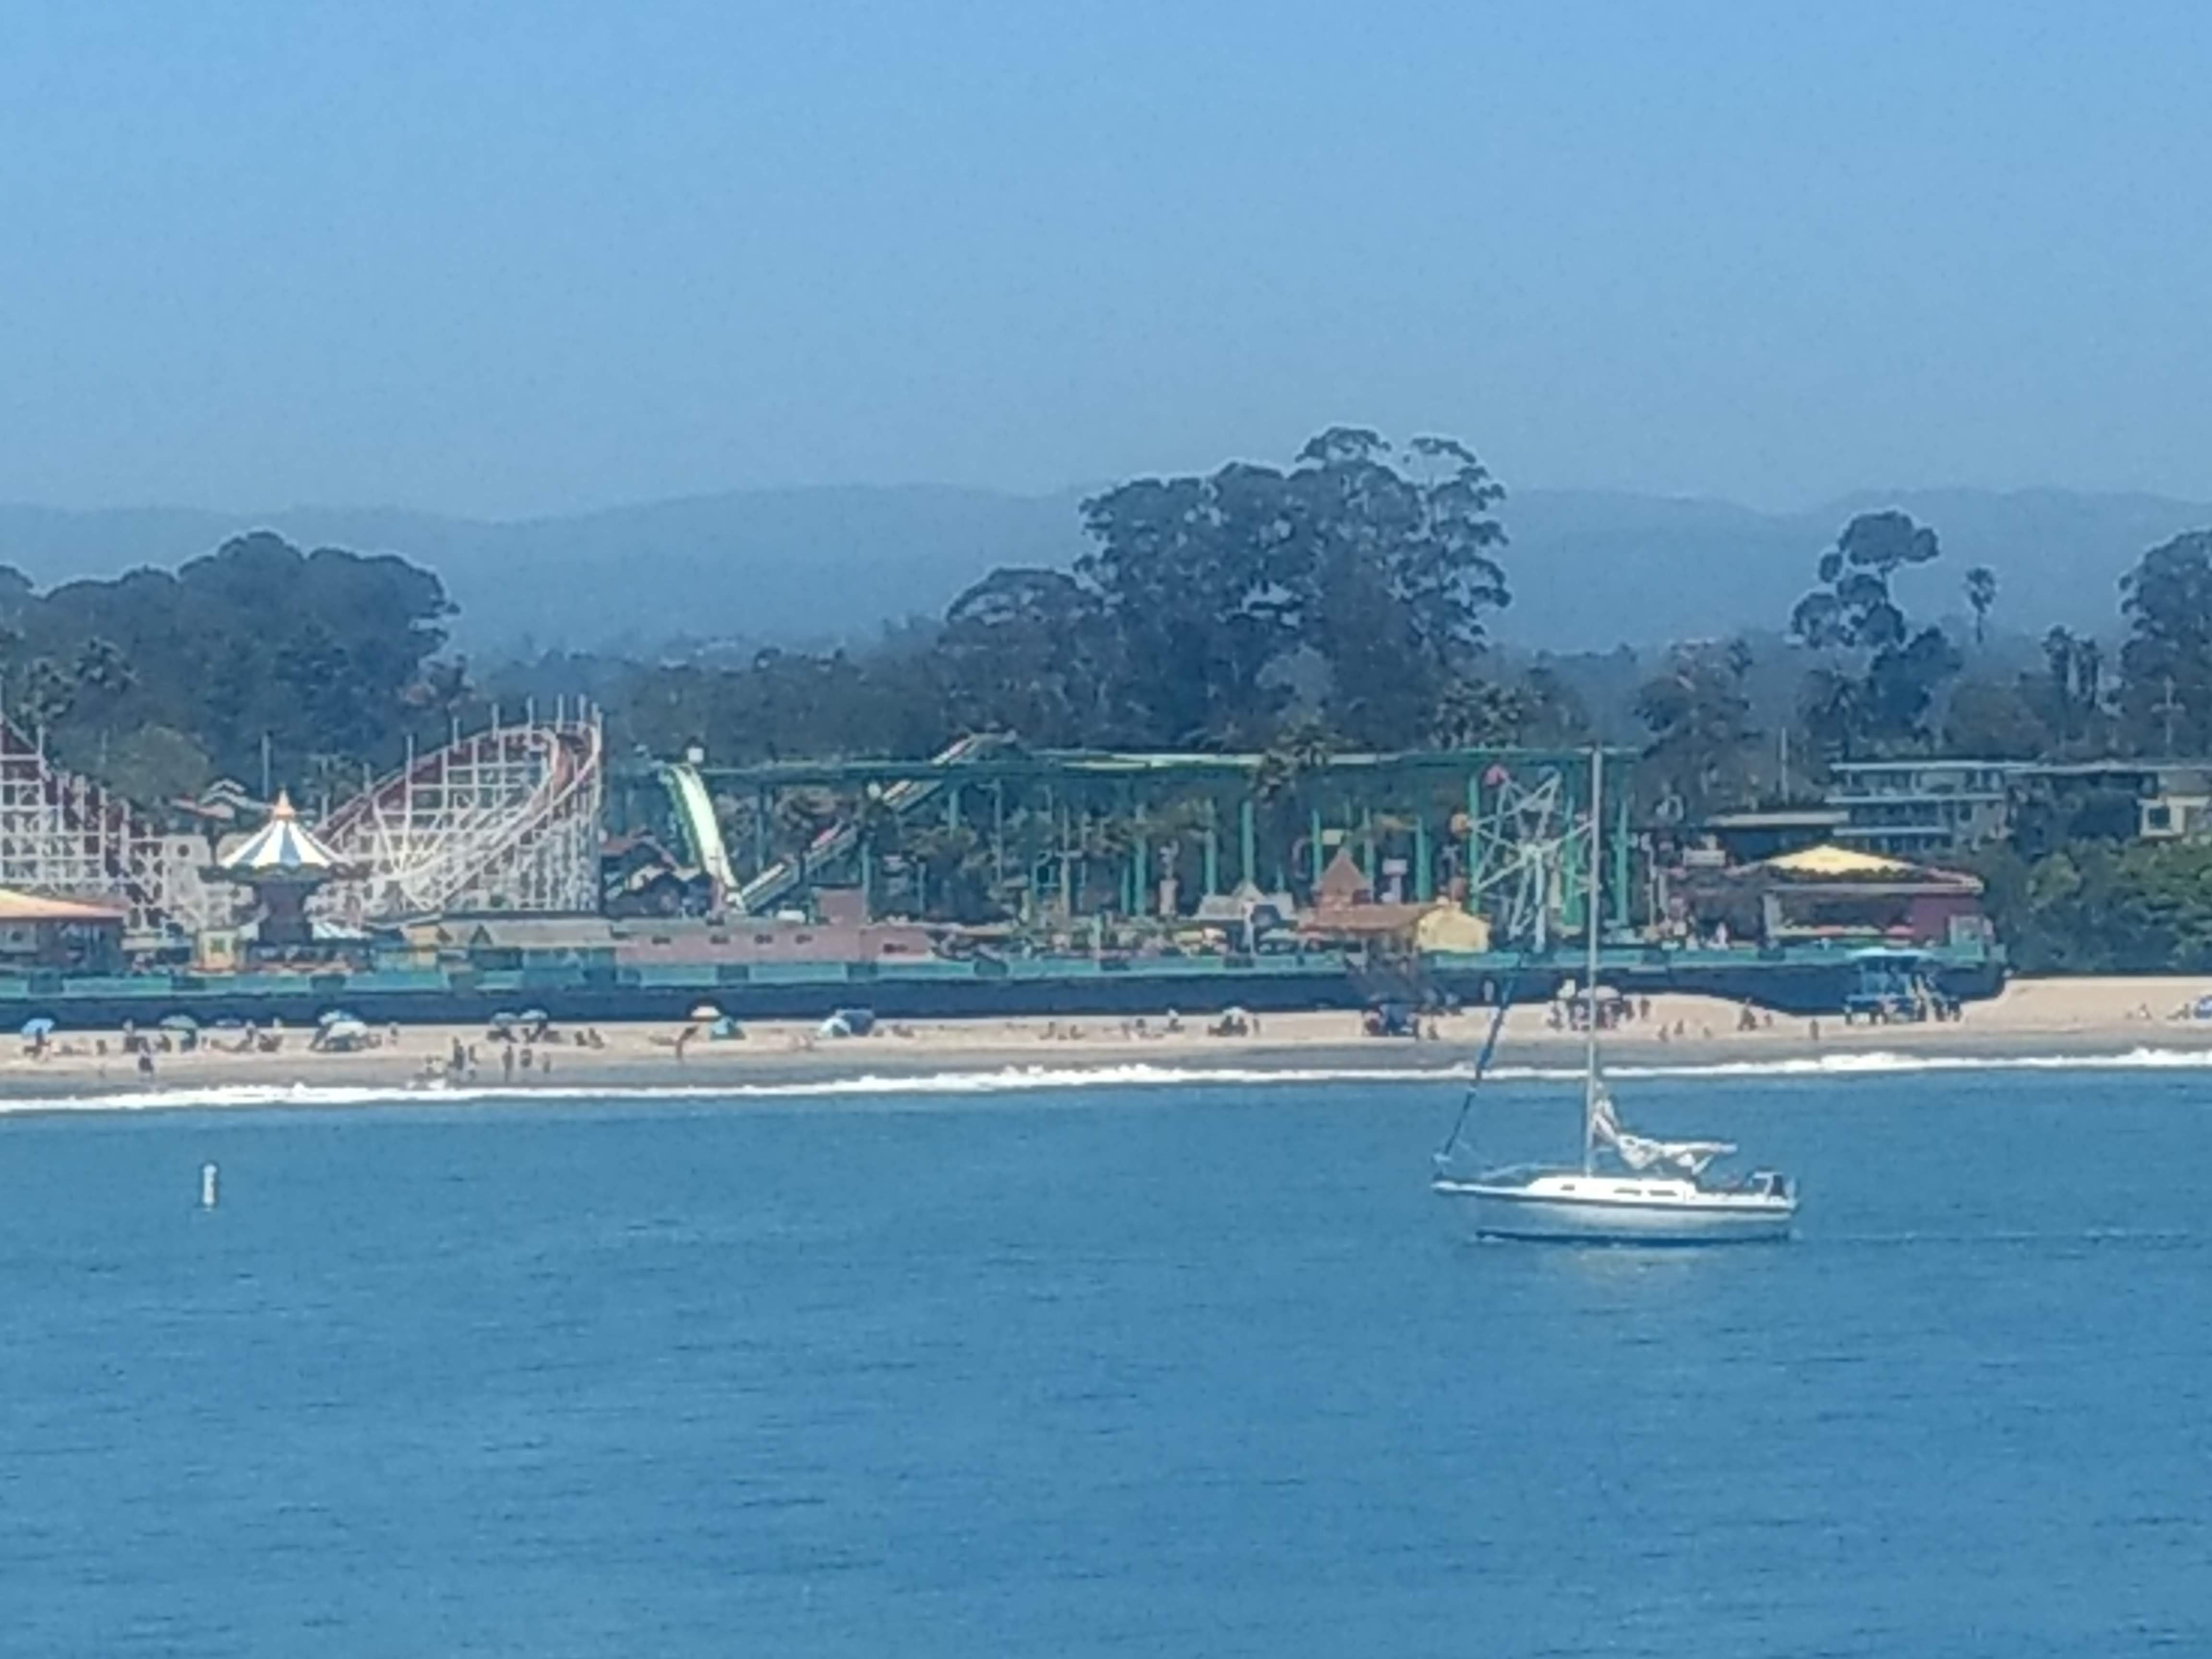 The Santa Cruz boardwalk as viewed from the pier